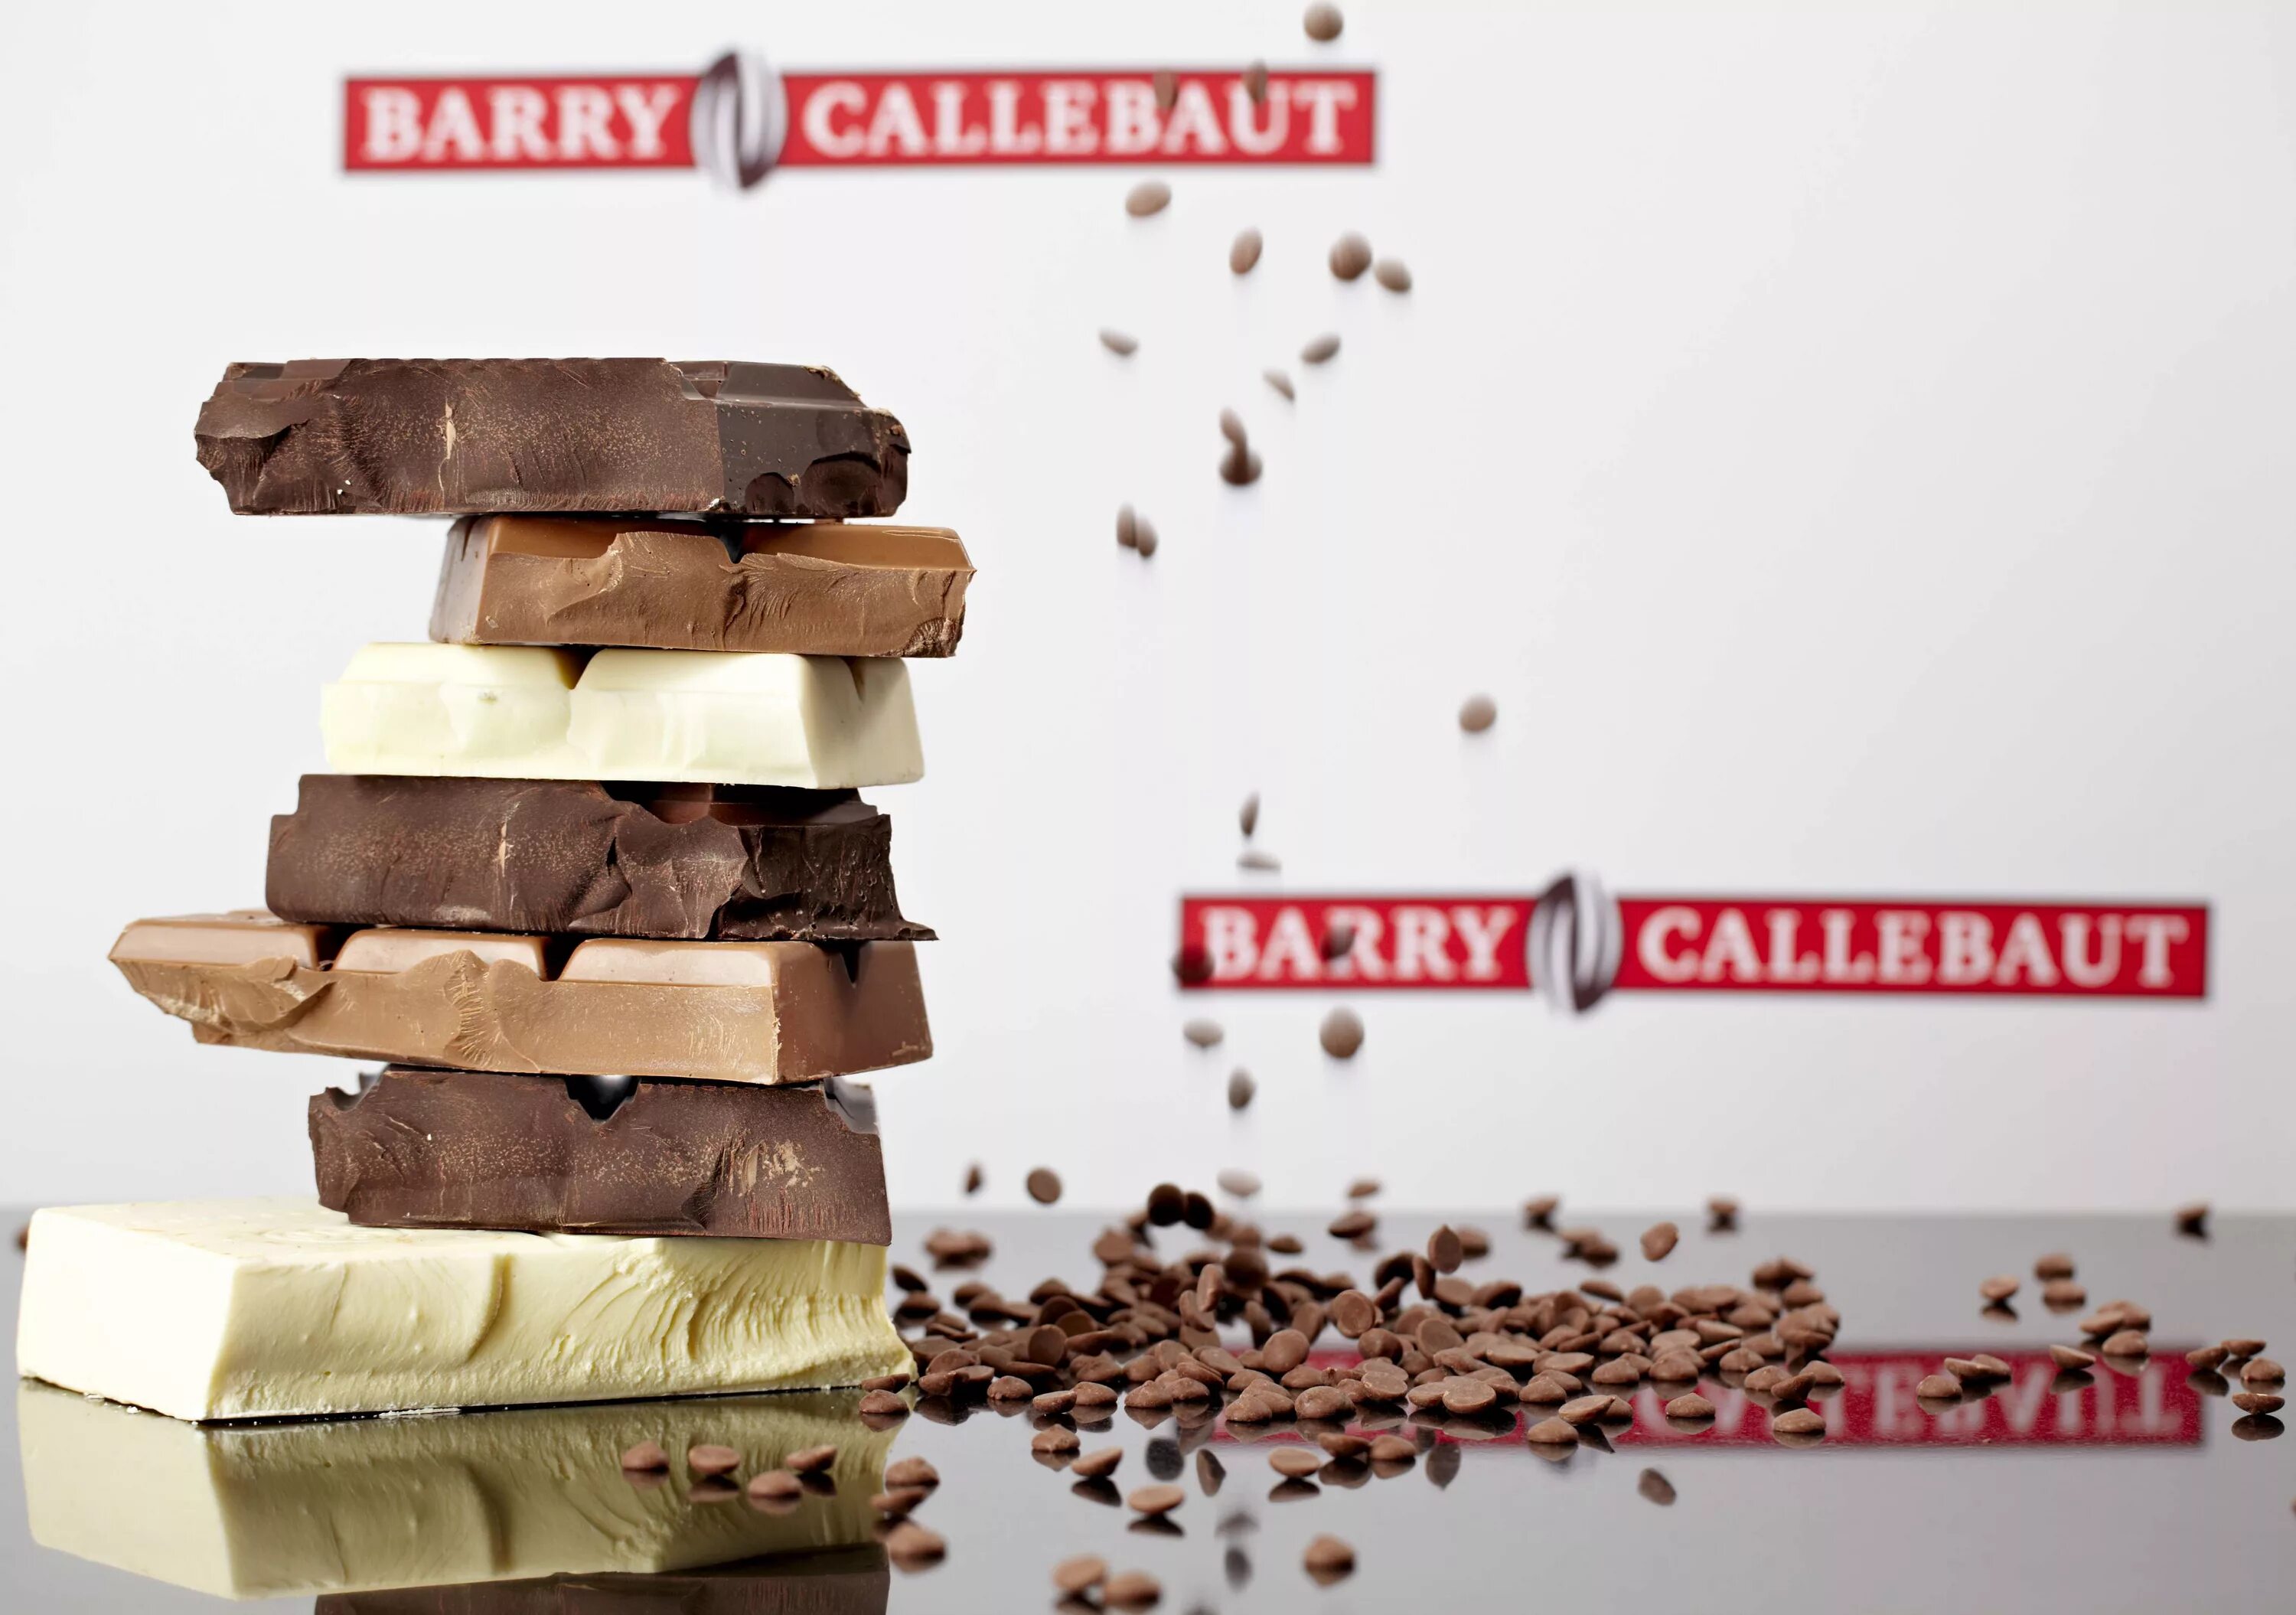 Шоколадная фабрика Барри Каллебаут. Бельгийский шоколад Barry Callebaut. Барри Каллебаут шоколад Фабика. Шоколад барри каллебаут